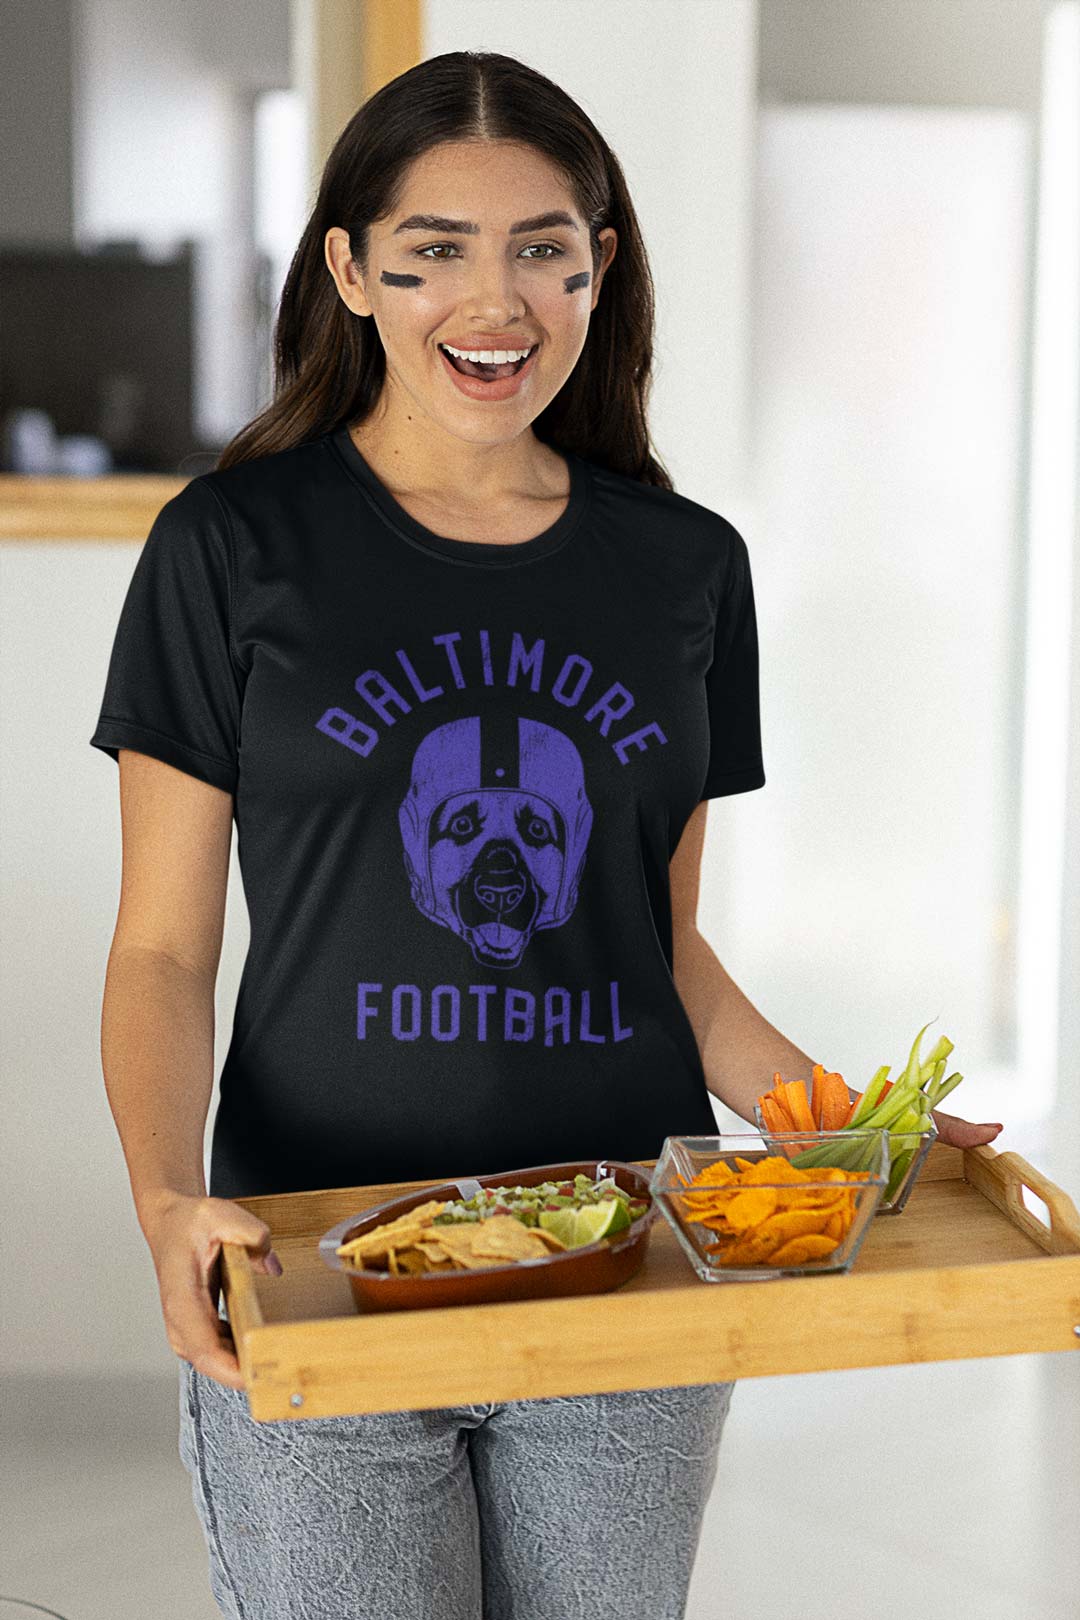 Baltimore Football German Shepherd T-Shirt